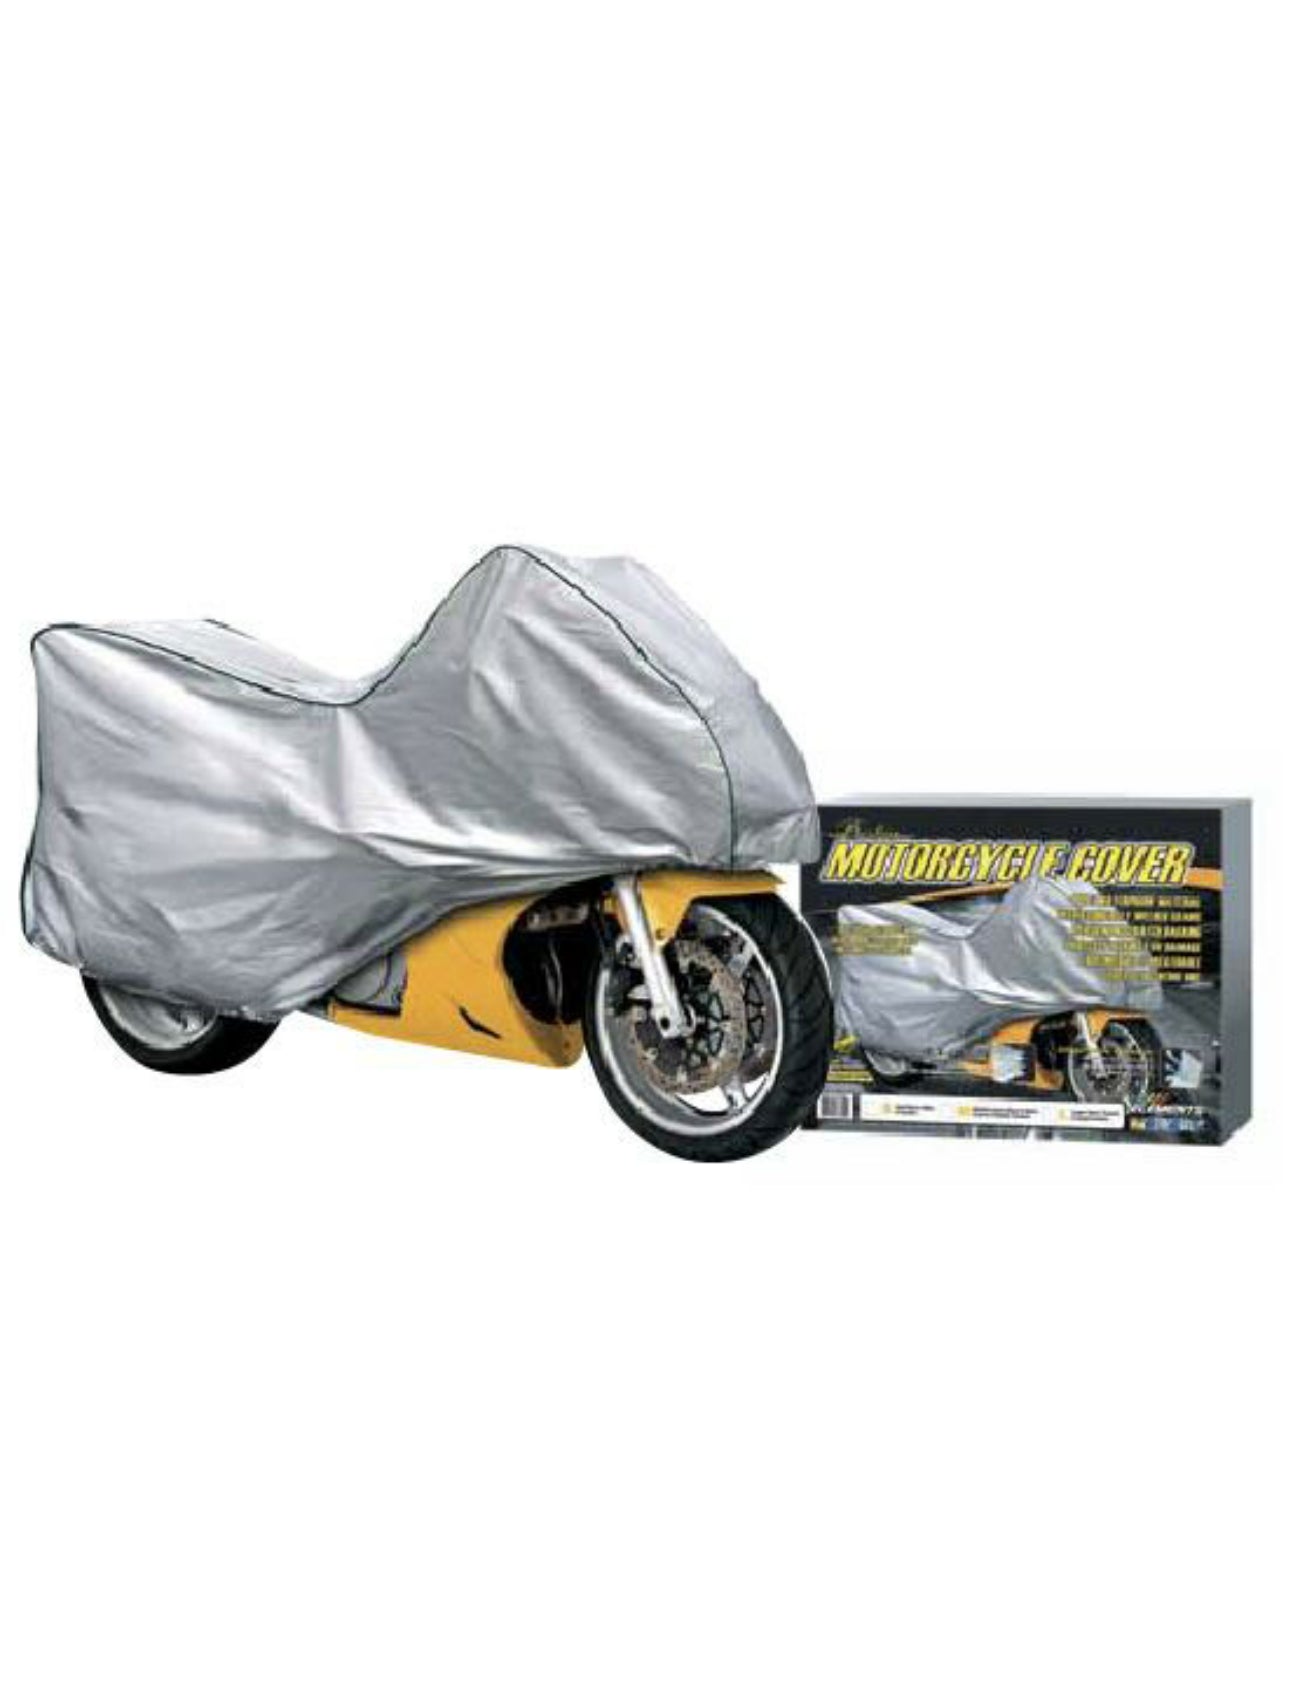 MOTORCYCLE COVER PRESTIGE 500-1000CC